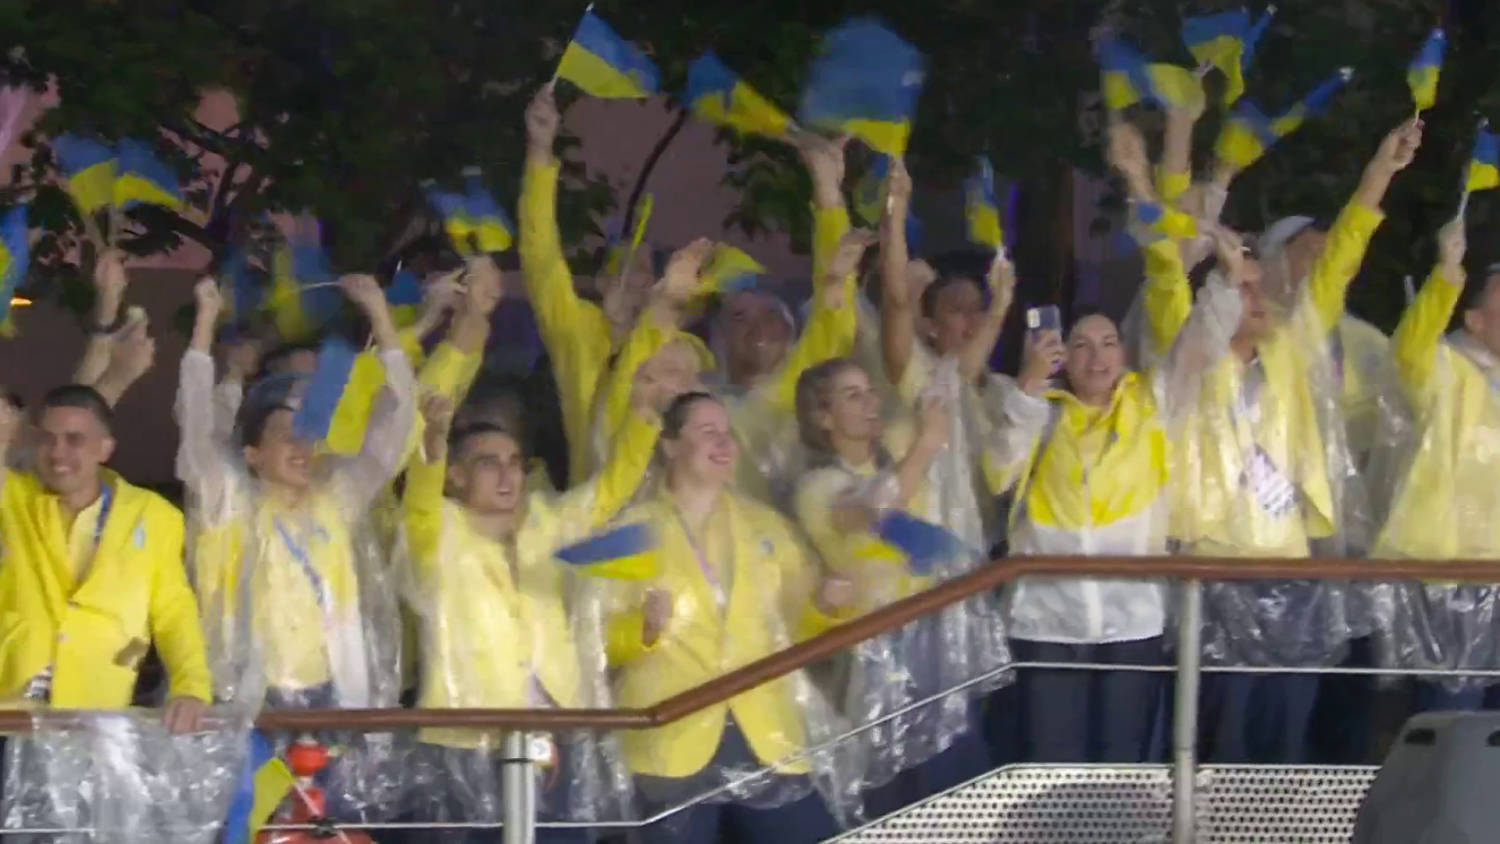 Smallest Ukrainian delegation makes opening ceremony entrance